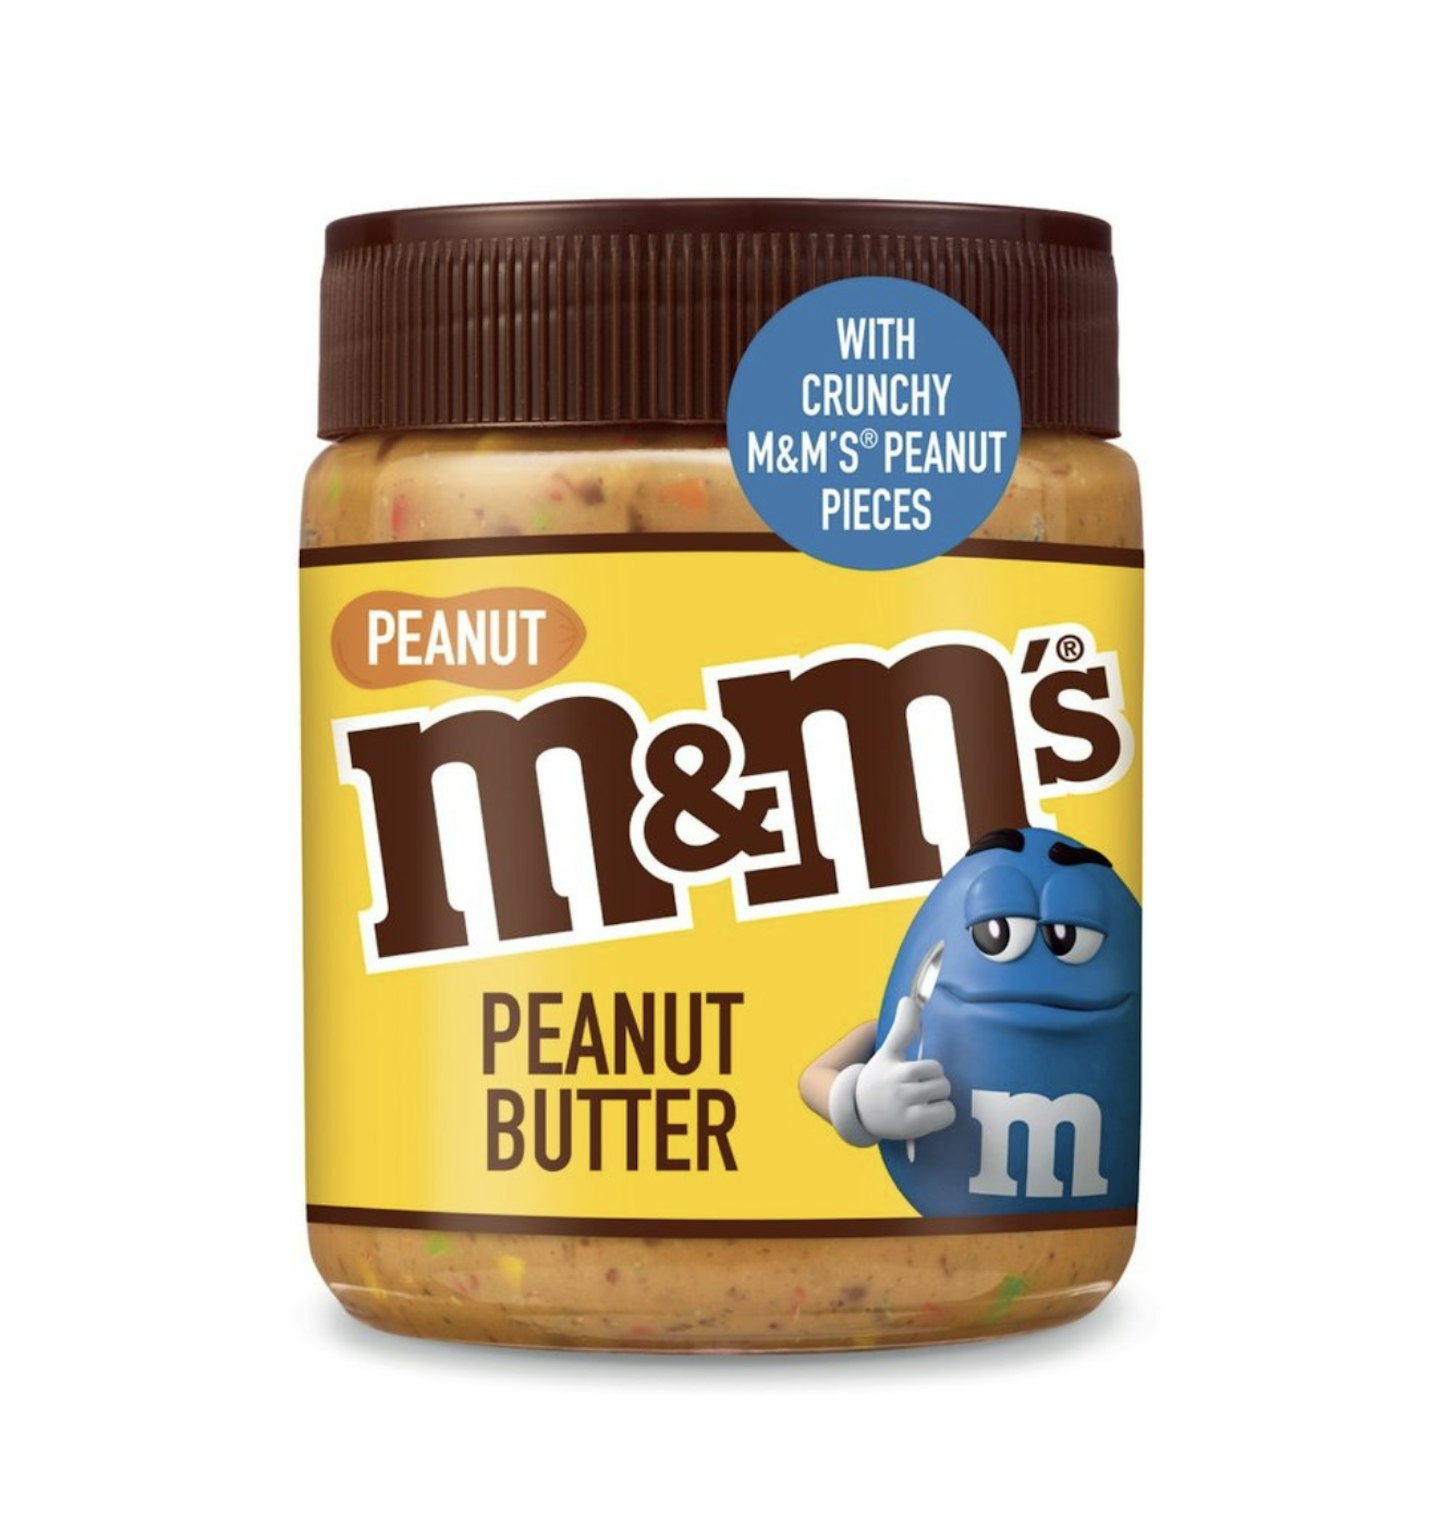 Peanut butter with crunchy m&m's peanut pieces